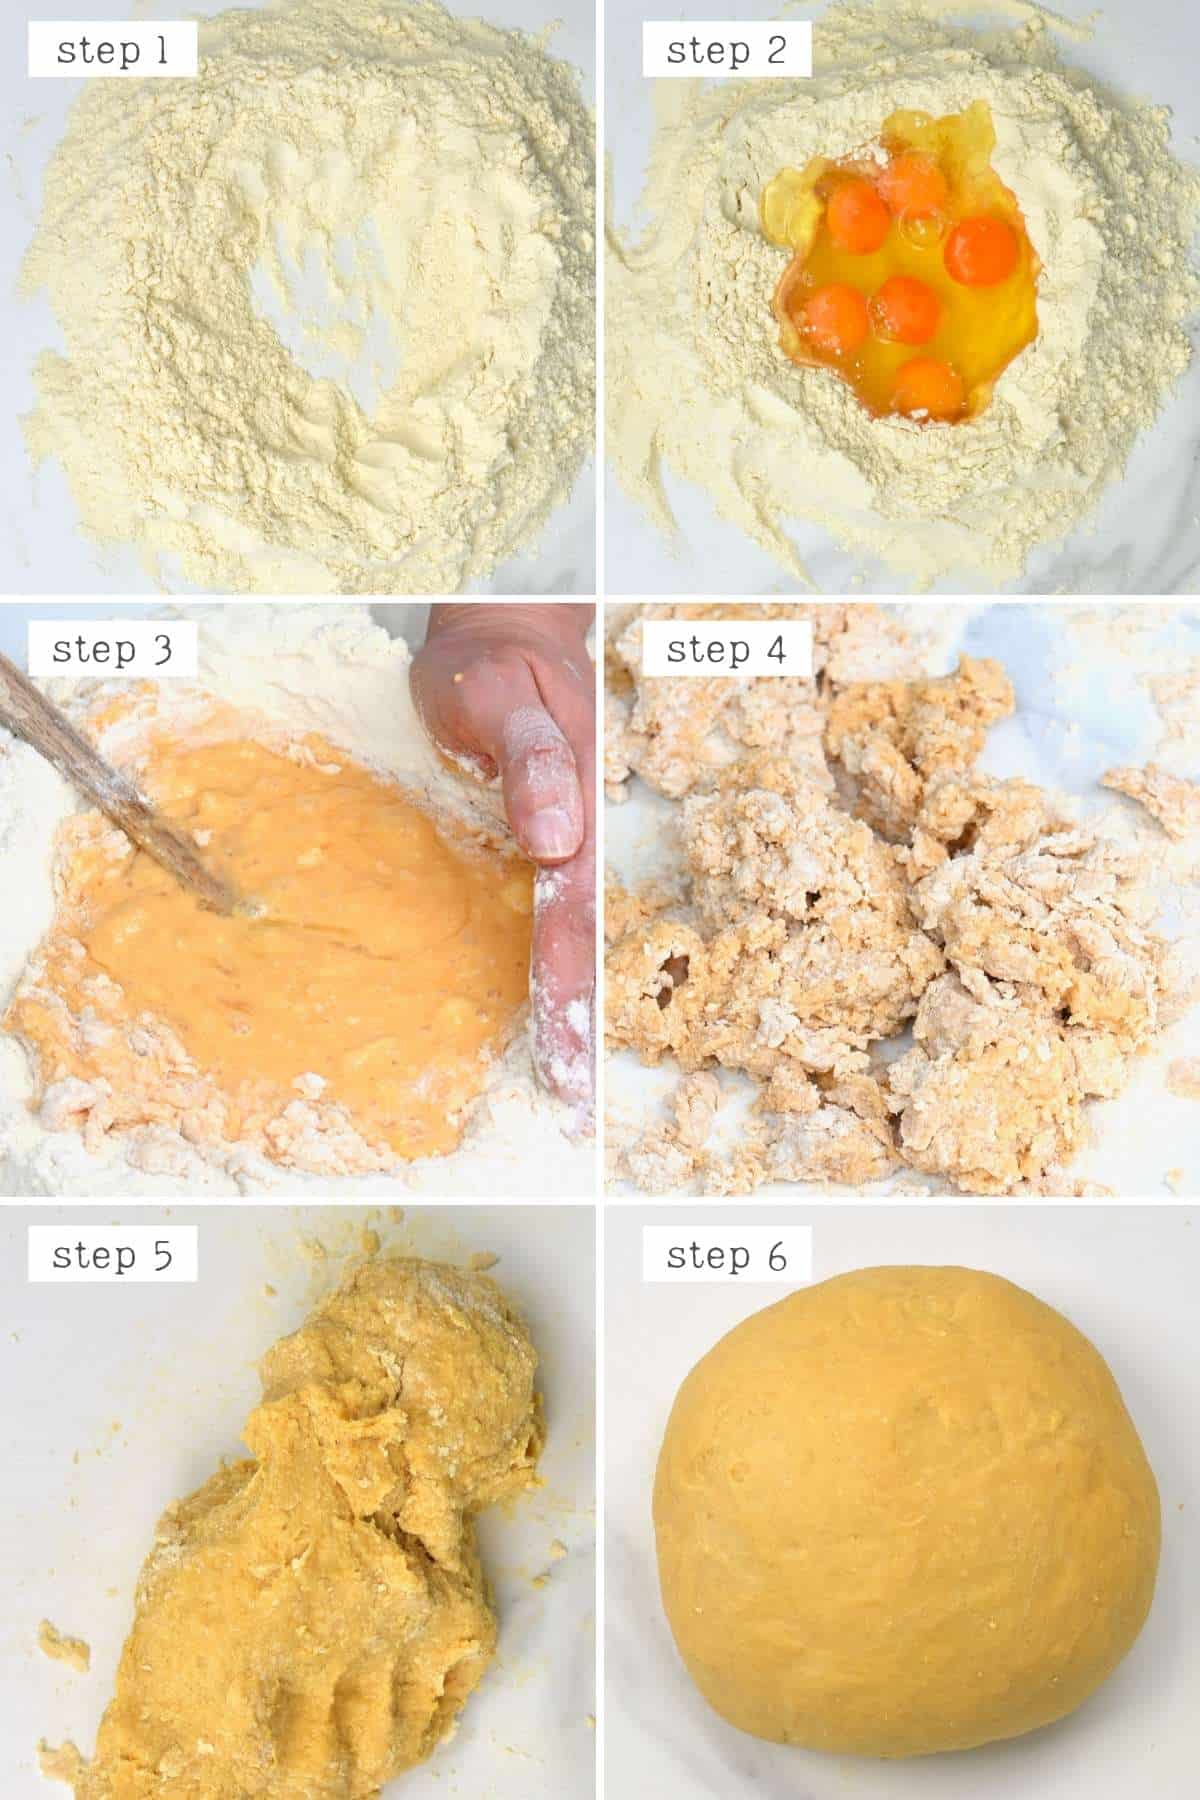 Steps for making pasta dough